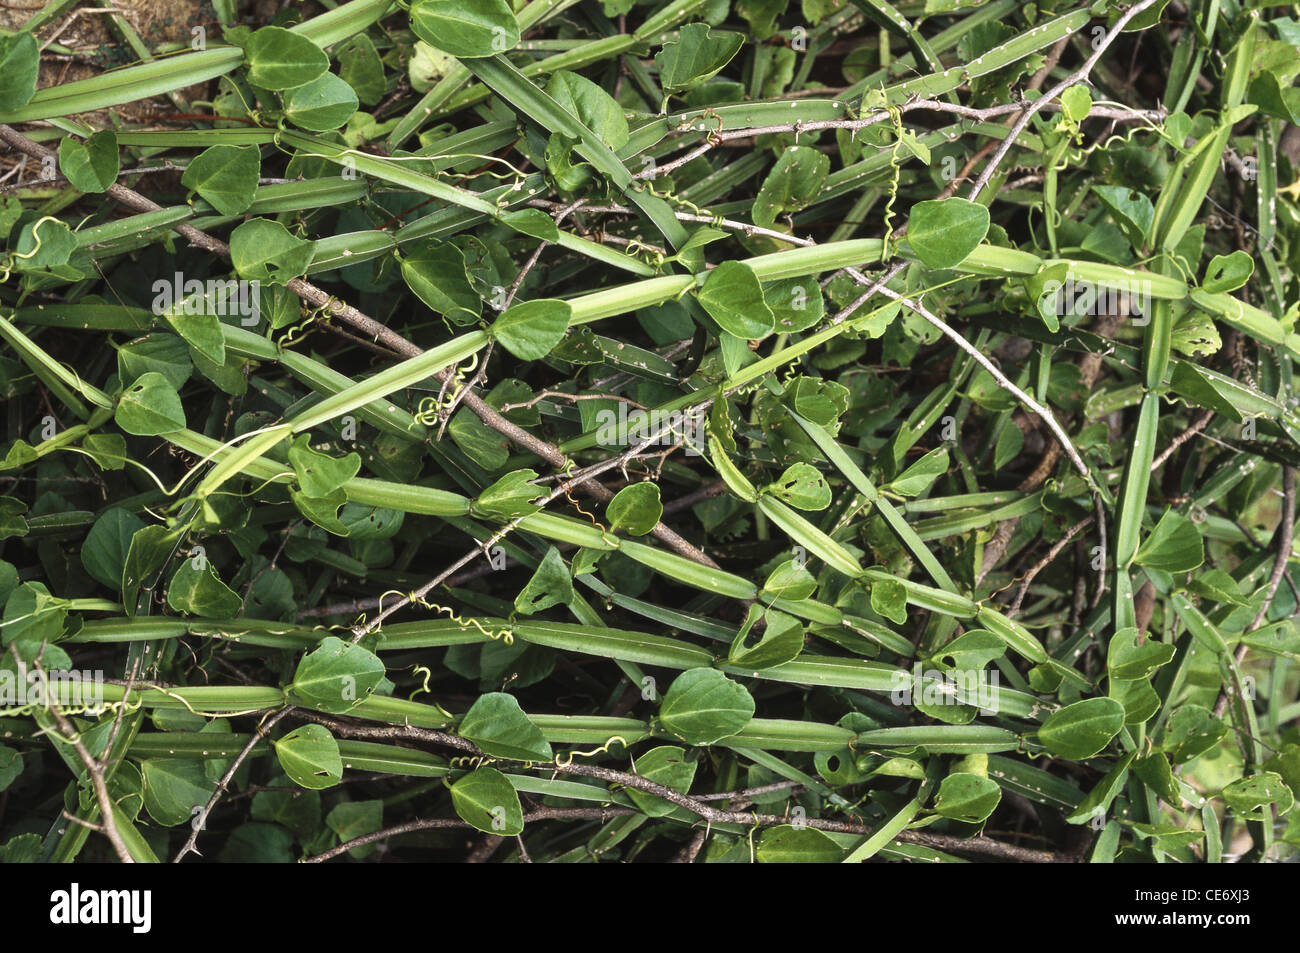 cissus quadrangularis; mehrjährige pflanze der traubenfamilie